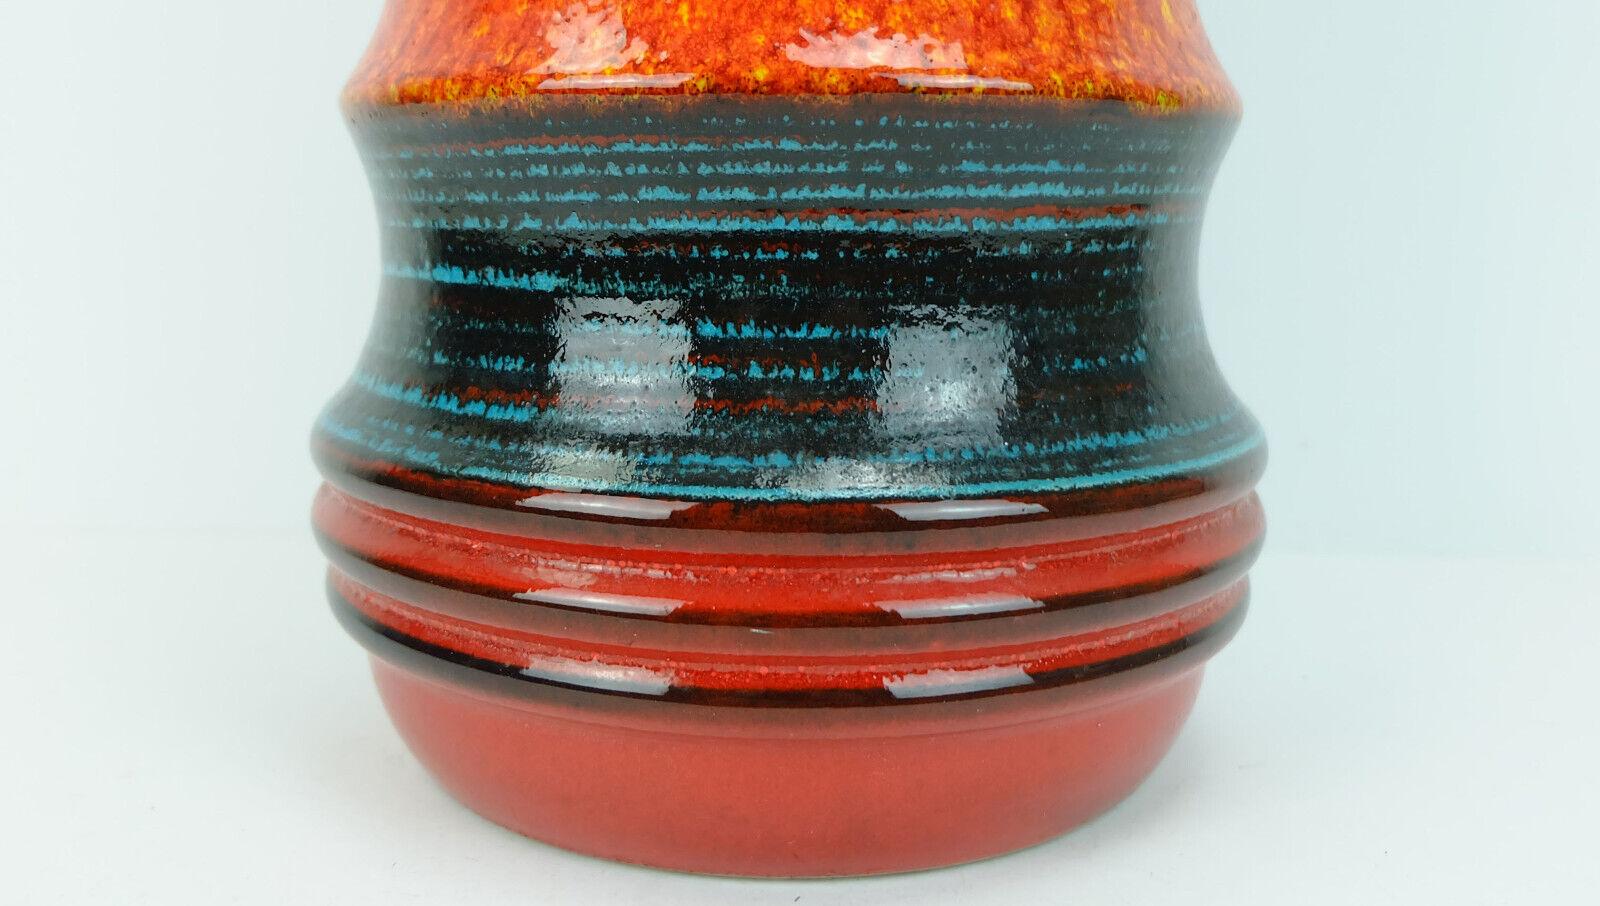 Ceramic large scheurich ceramic floorvase model 427-47 stripe pattern red orange black